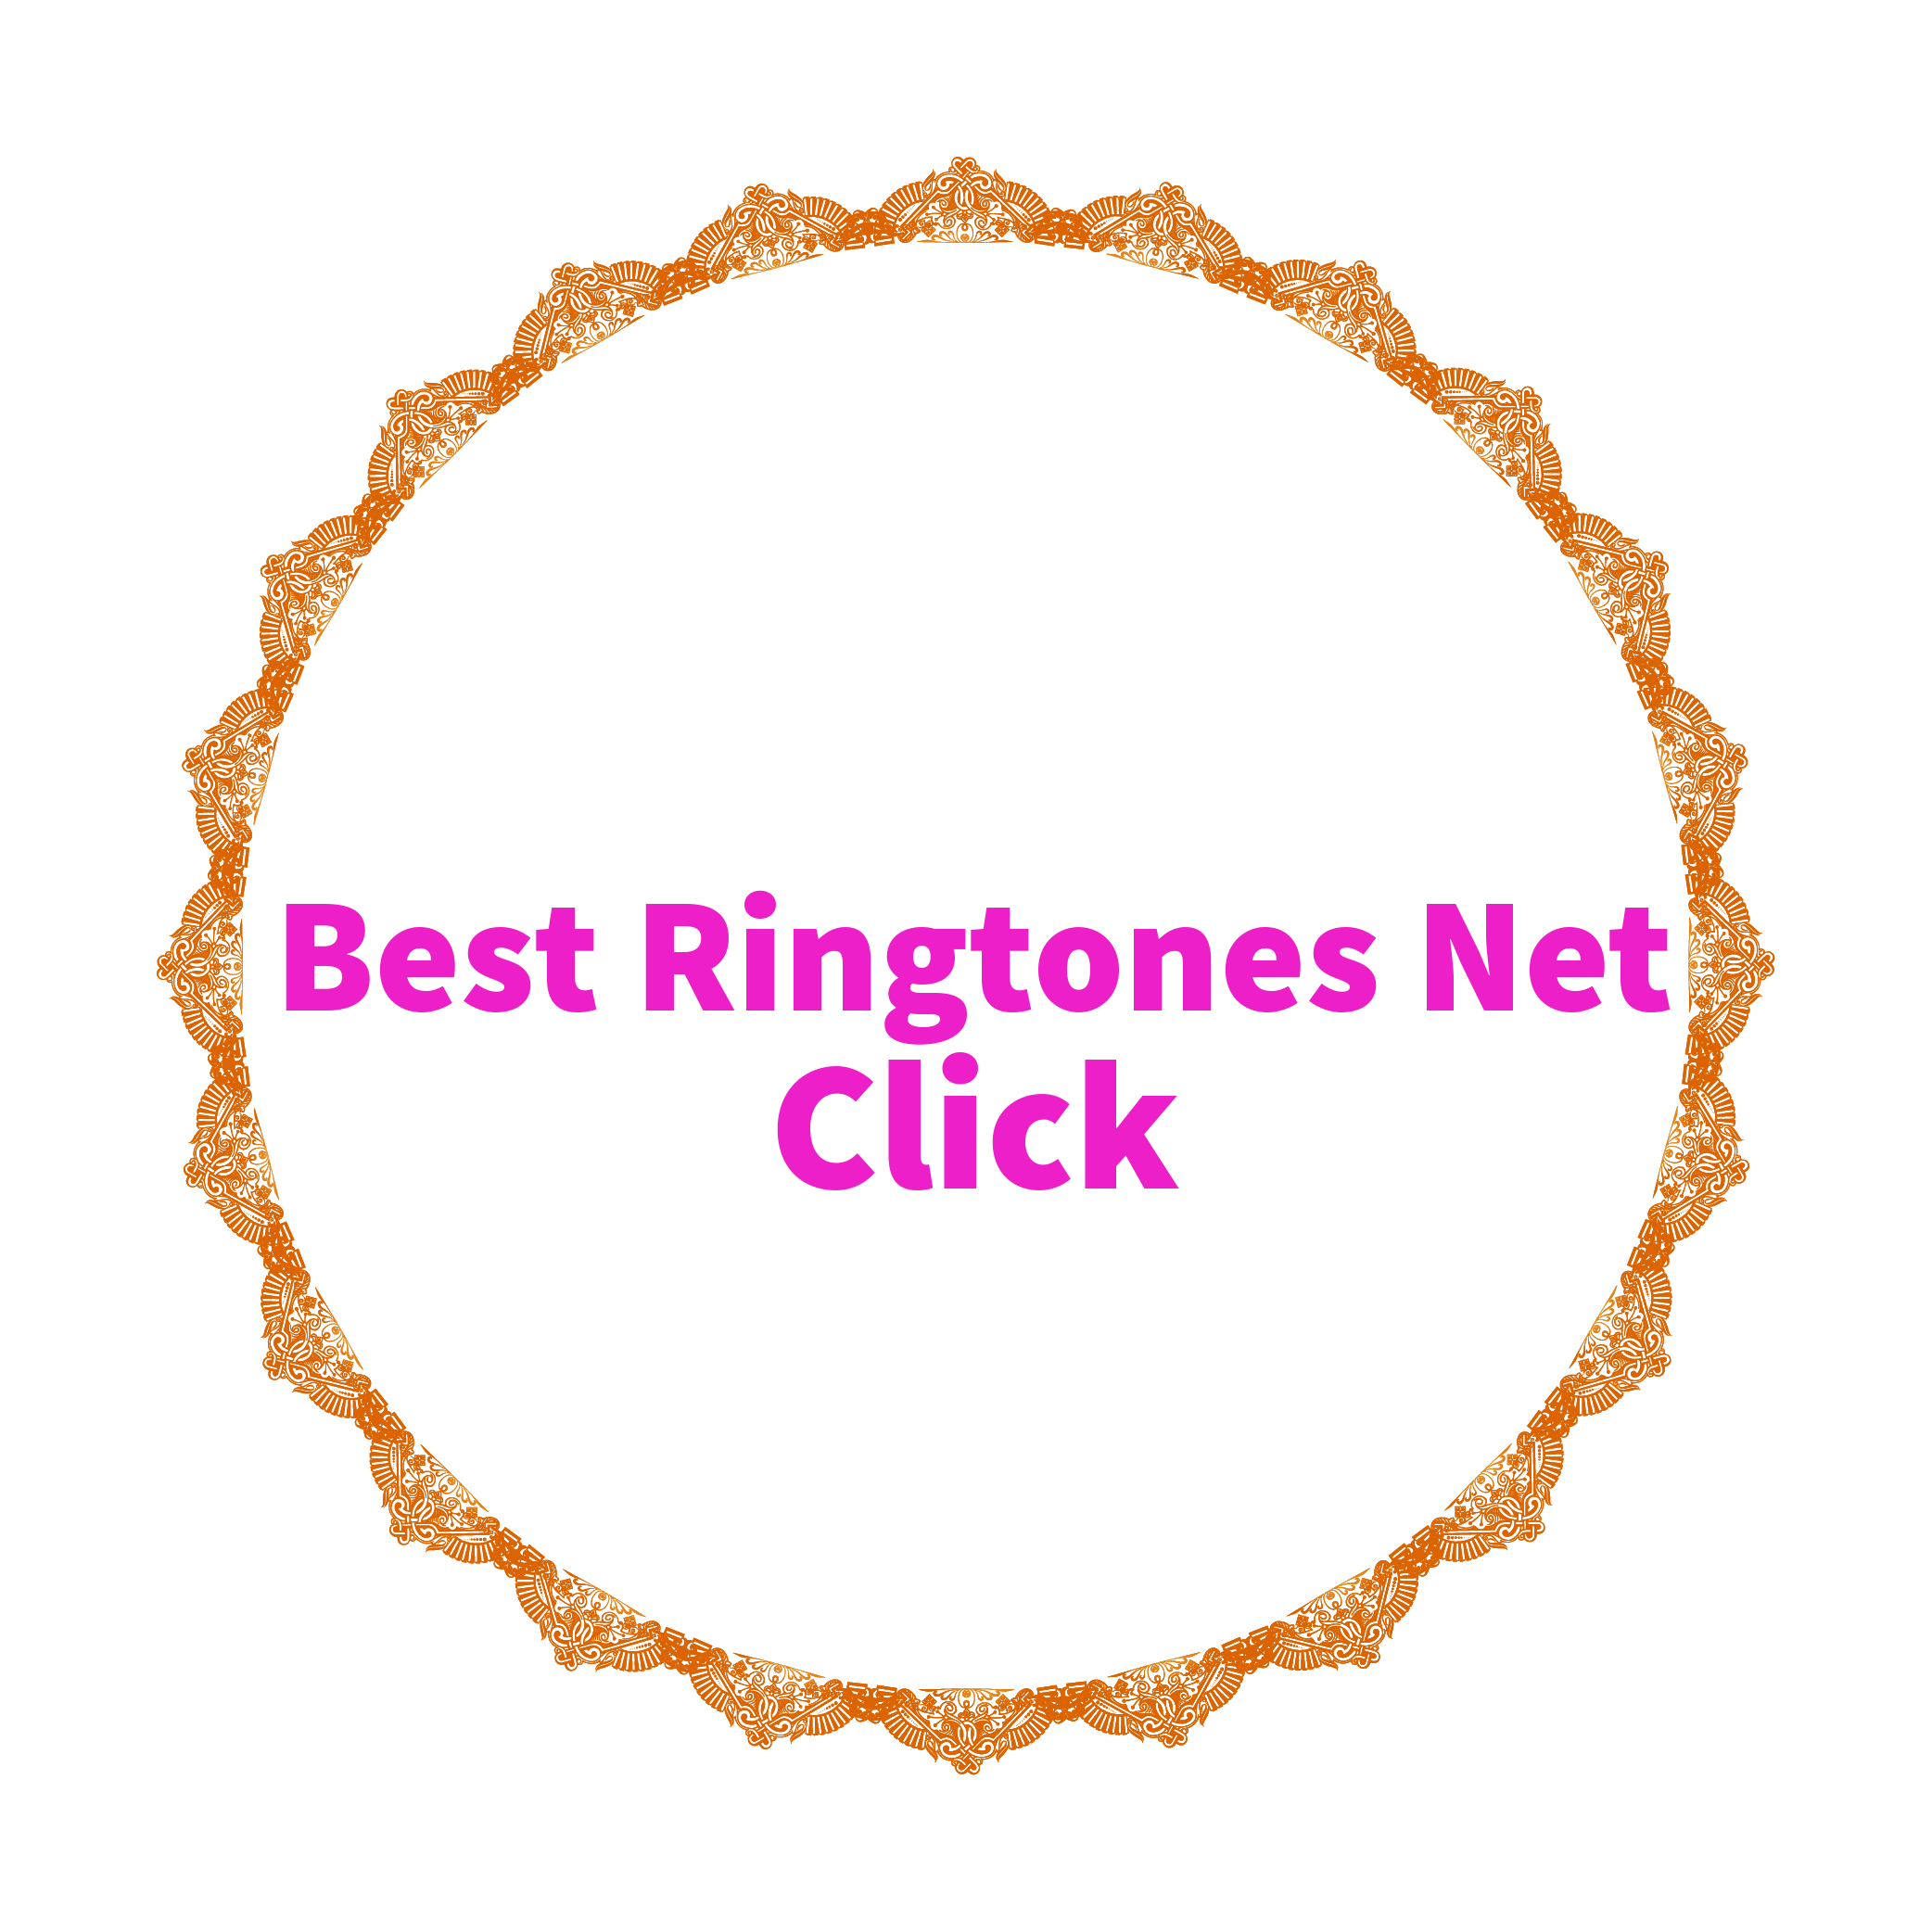 Best Ringtones Net  Click (bestringtonesnetclick)